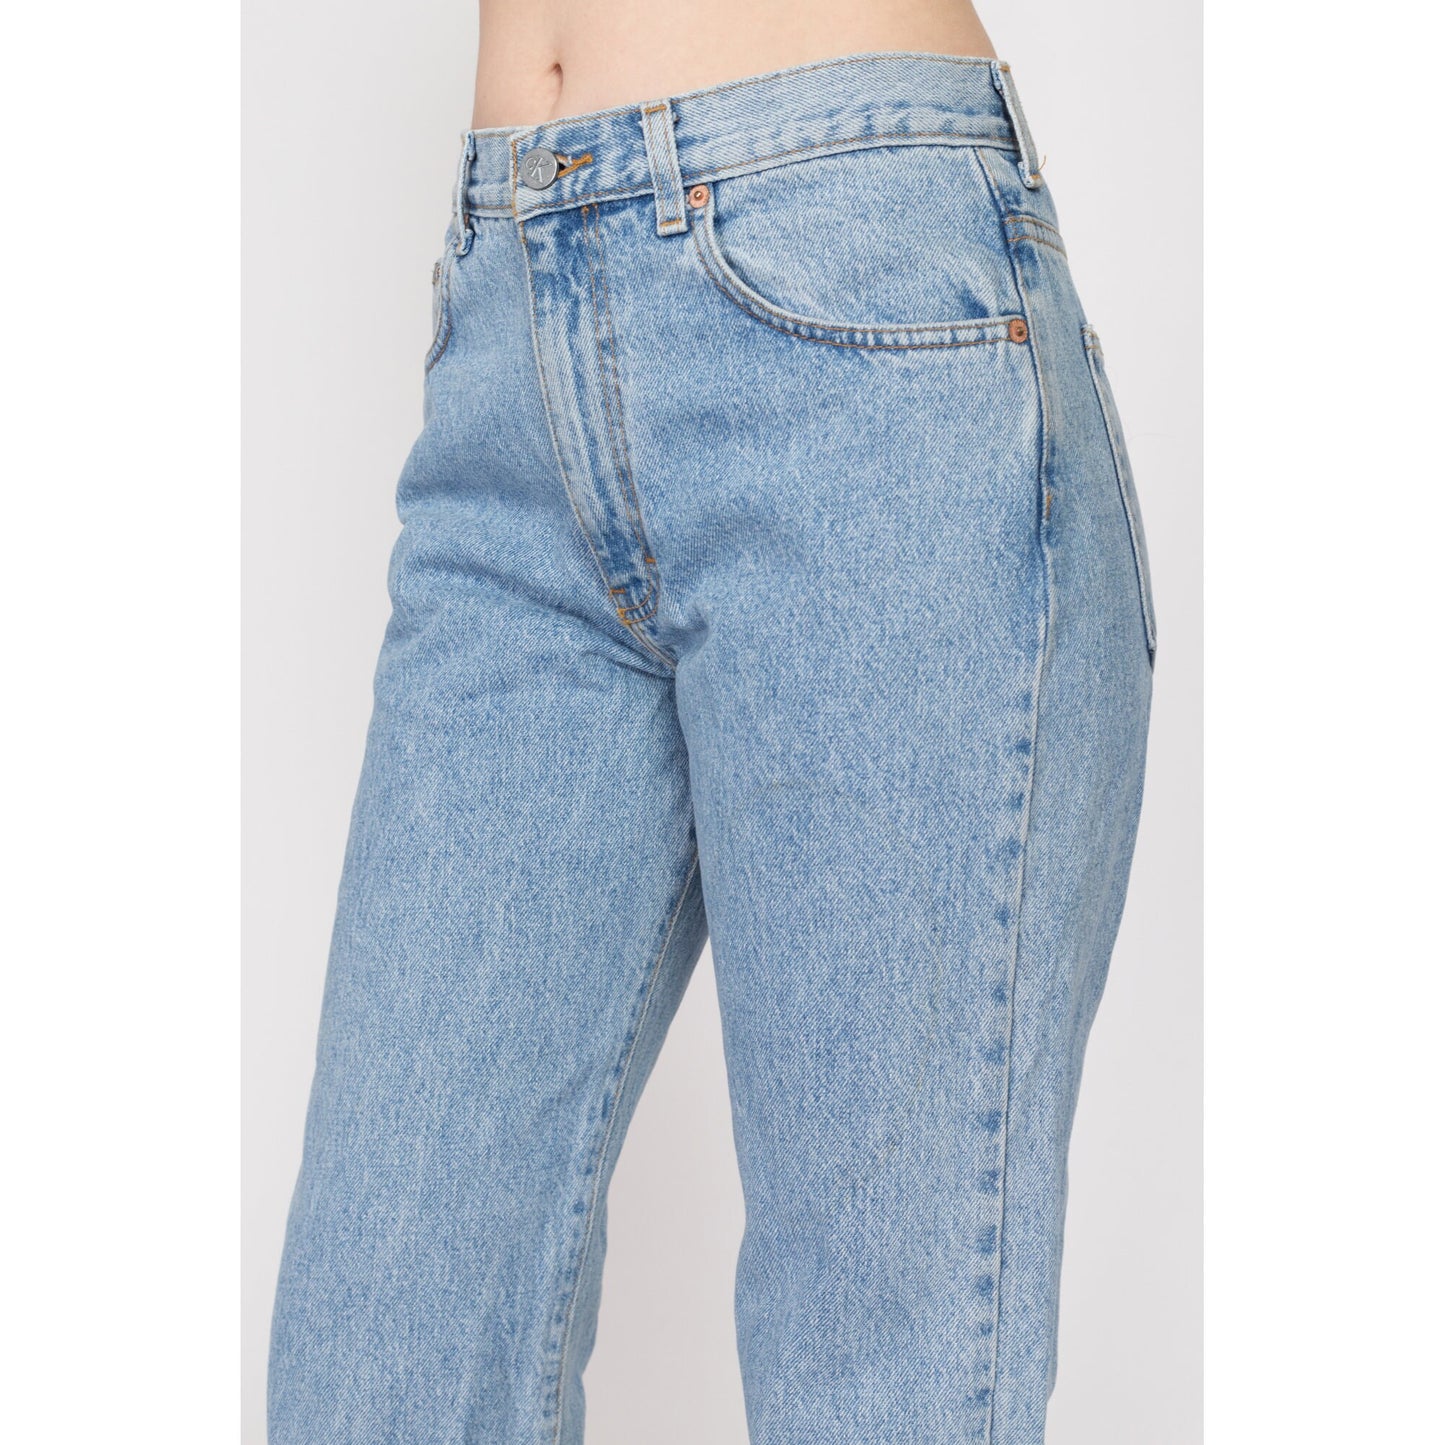 Medium 90s Calvin Klein Light Wash Straight Leg Jeans 30.5" | Vintage CK Denim High Waisted Mom Jeans